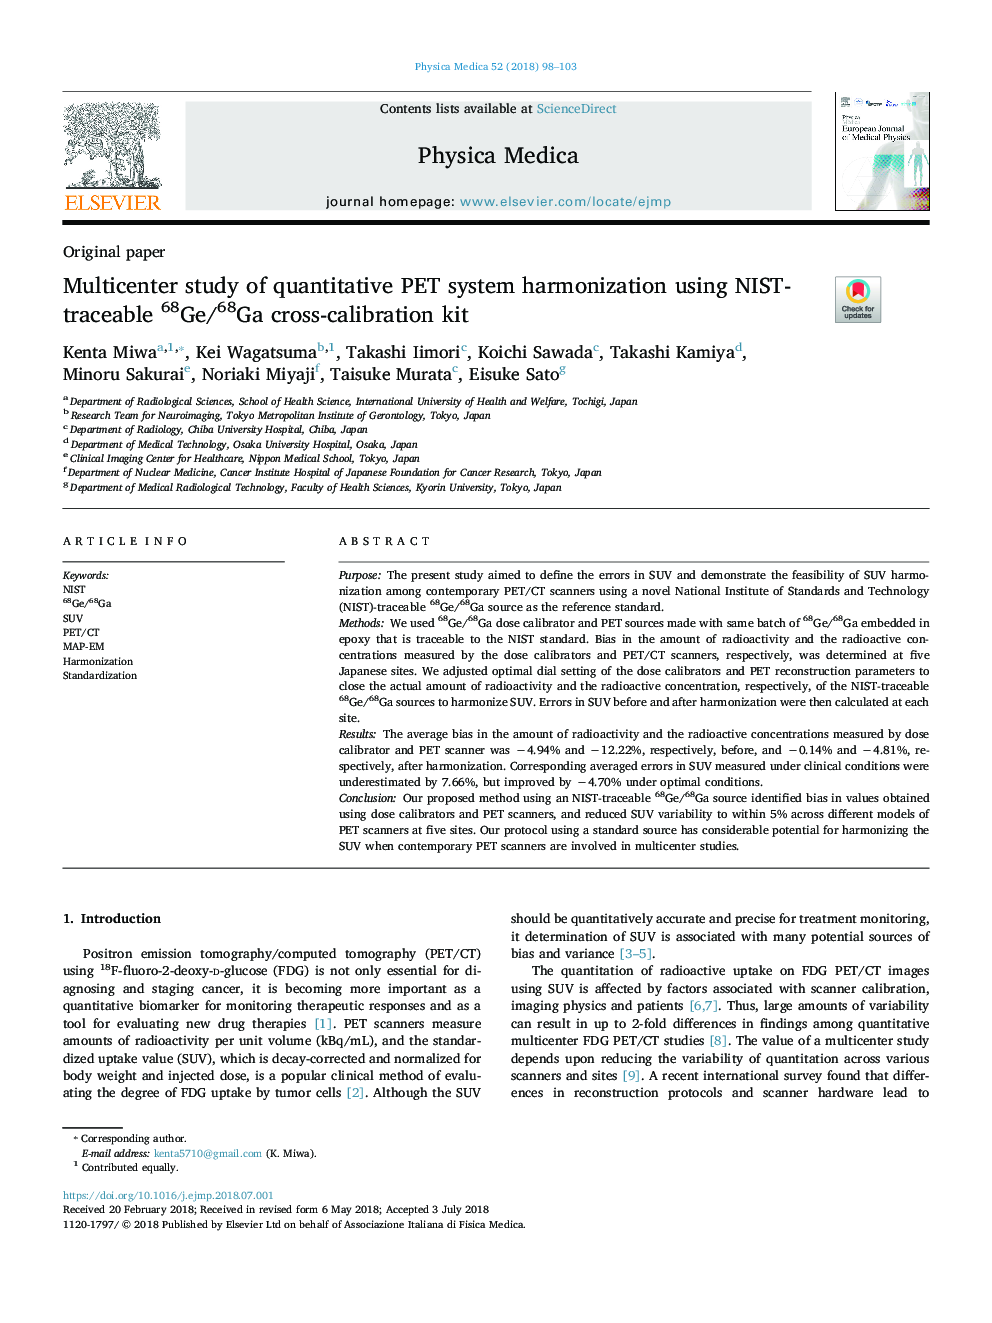 Multicenter study of quantitative PET system harmonization using NIST-traceable 68Ge/68Ga cross-calibration kit